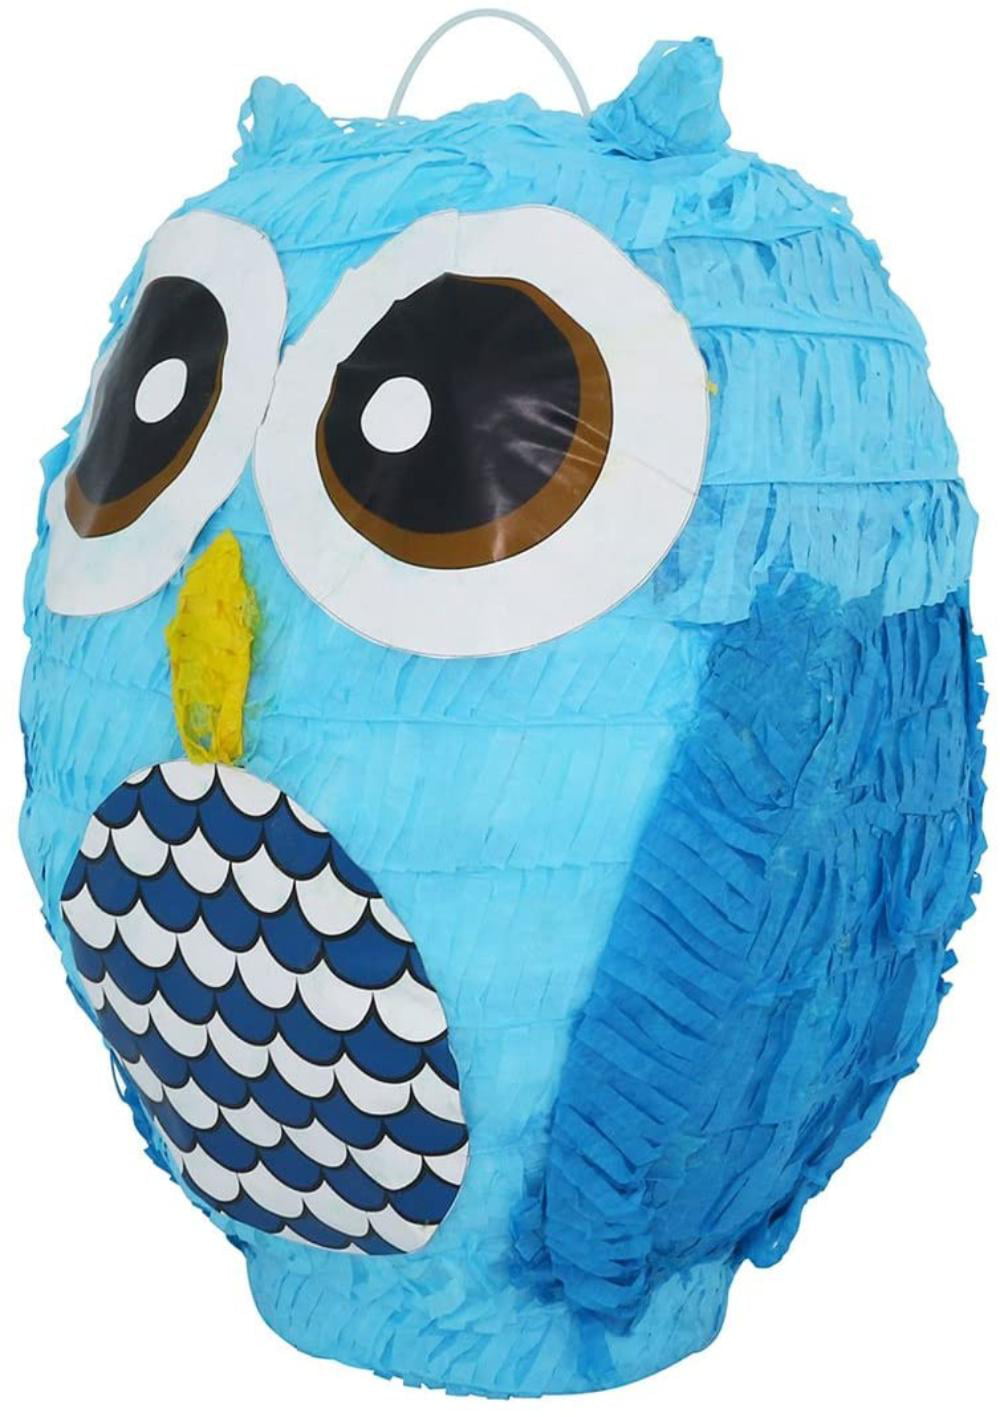 Center Piece or Photo Prop Ideal for Parties Lytio Blue Owl Pinata Cute and Adorable Piñata 